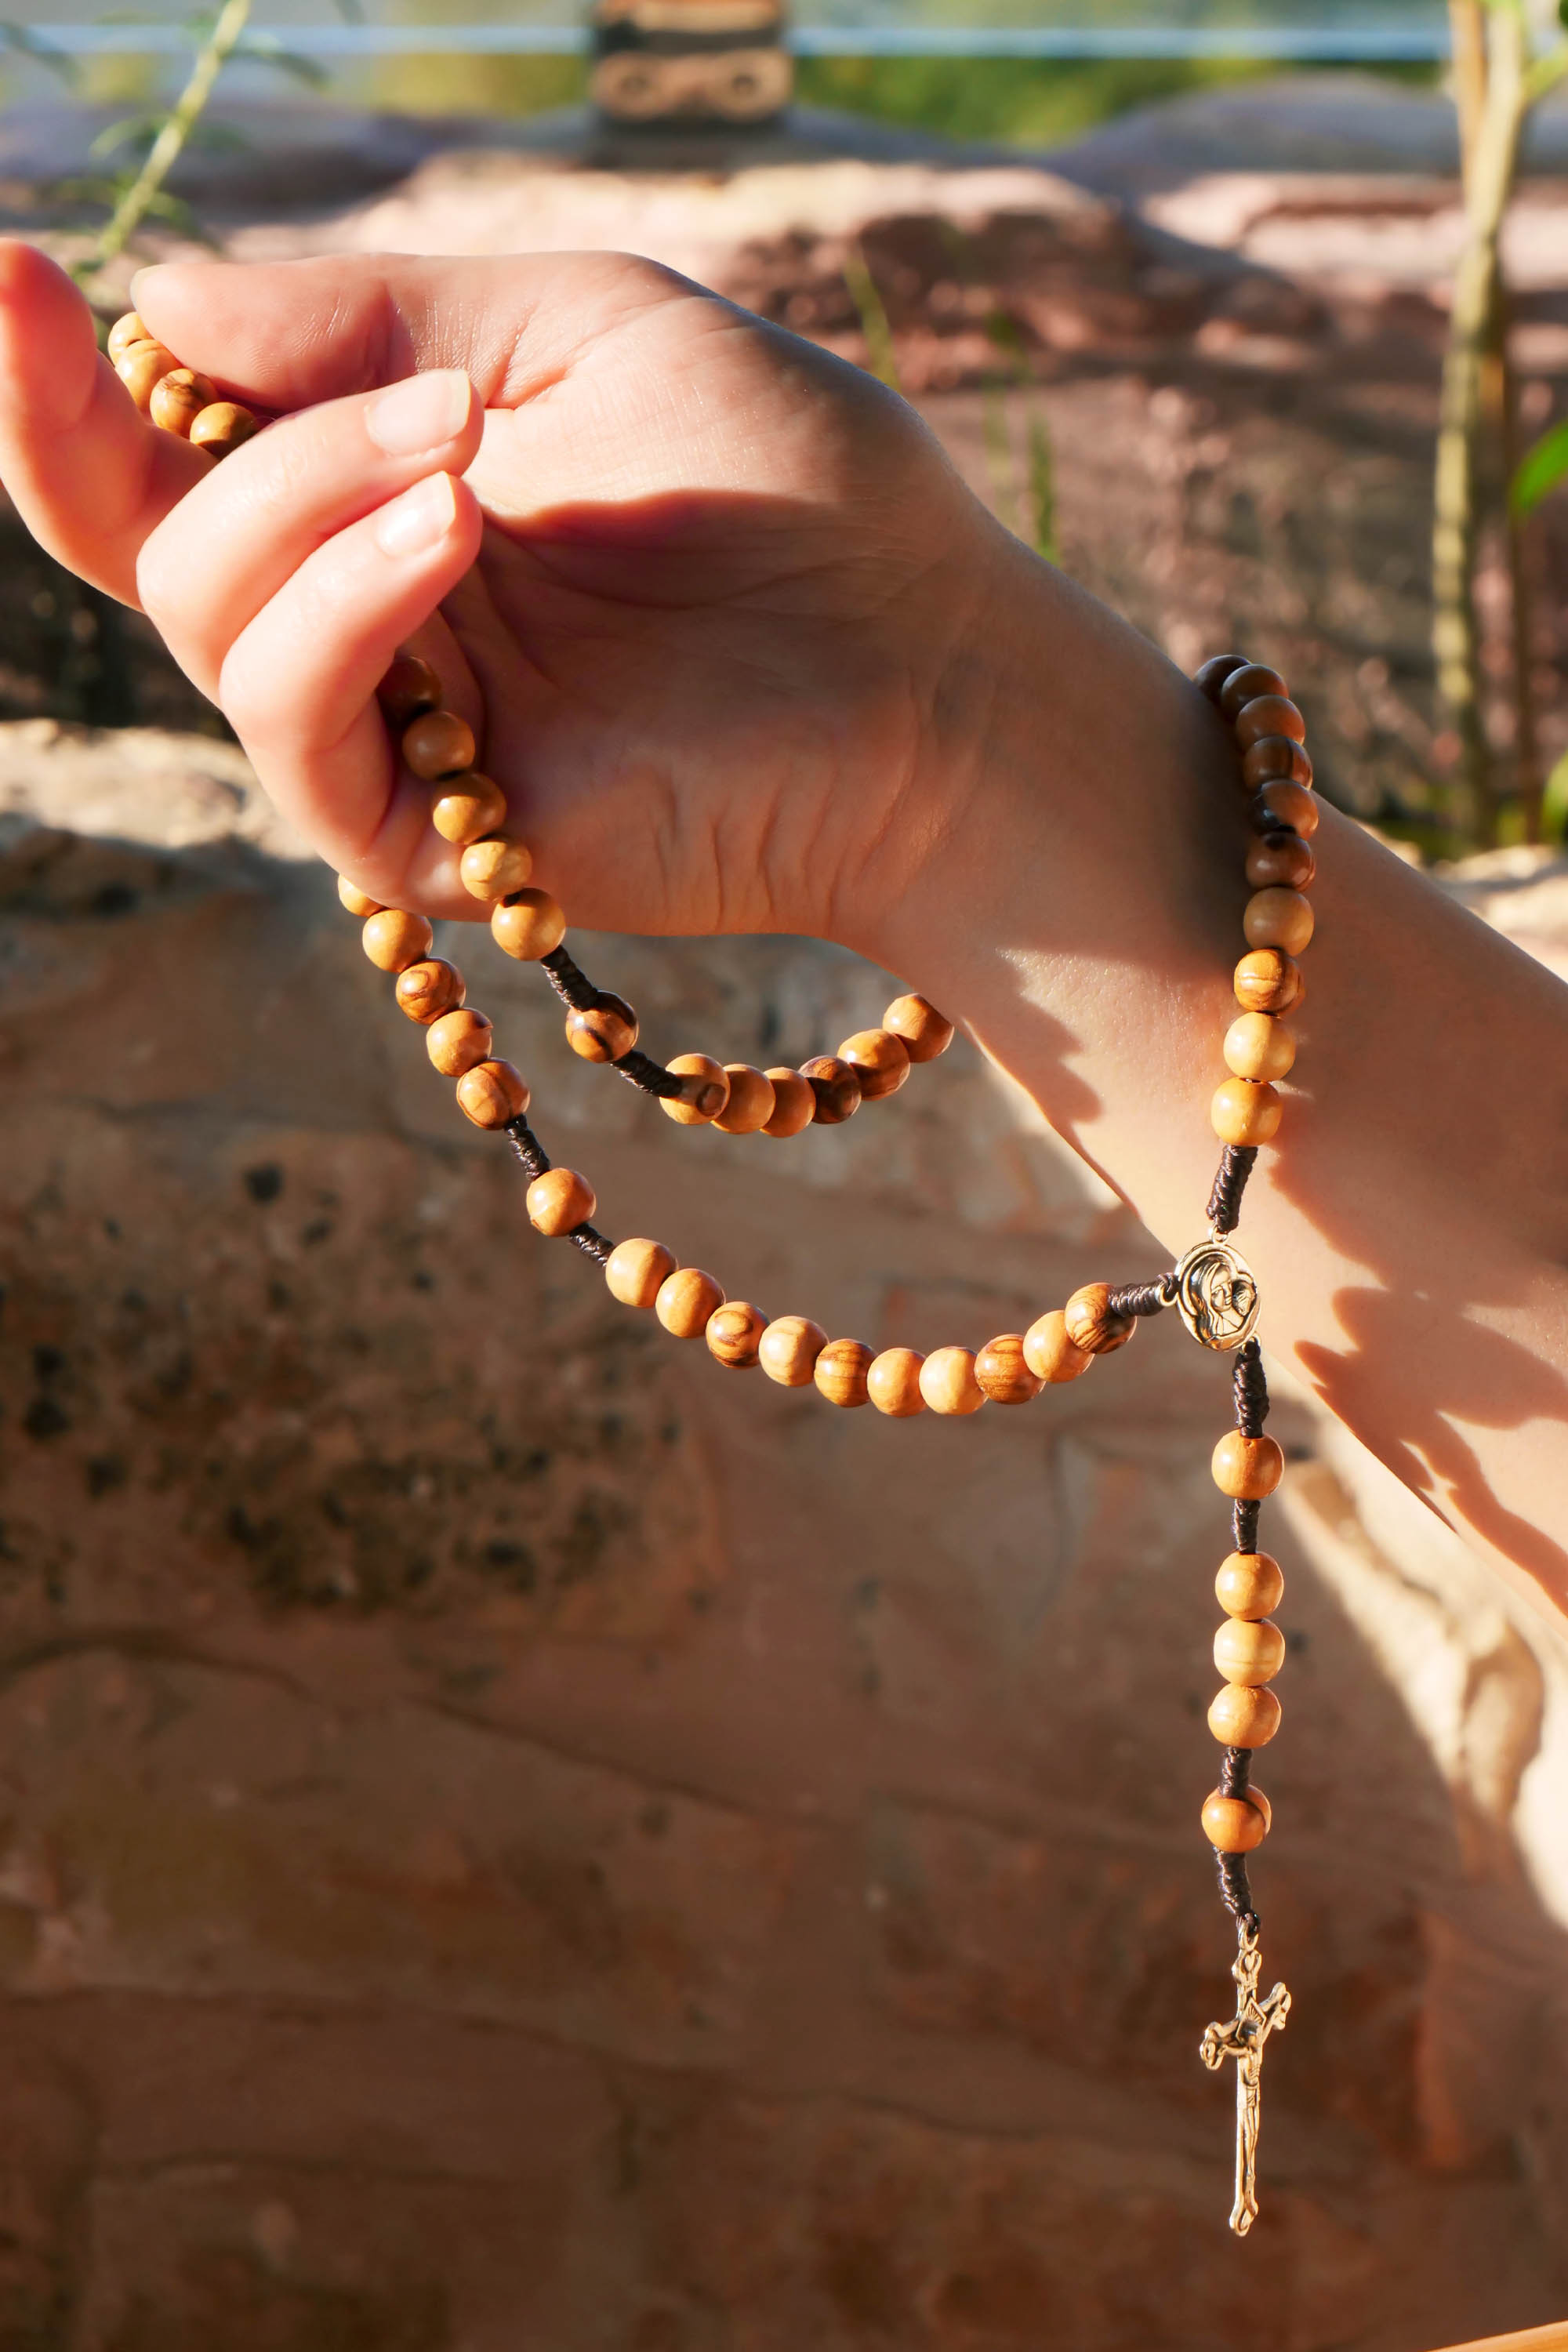 Word Of Wisdom Christian Rosary With original Bethlehem Soil